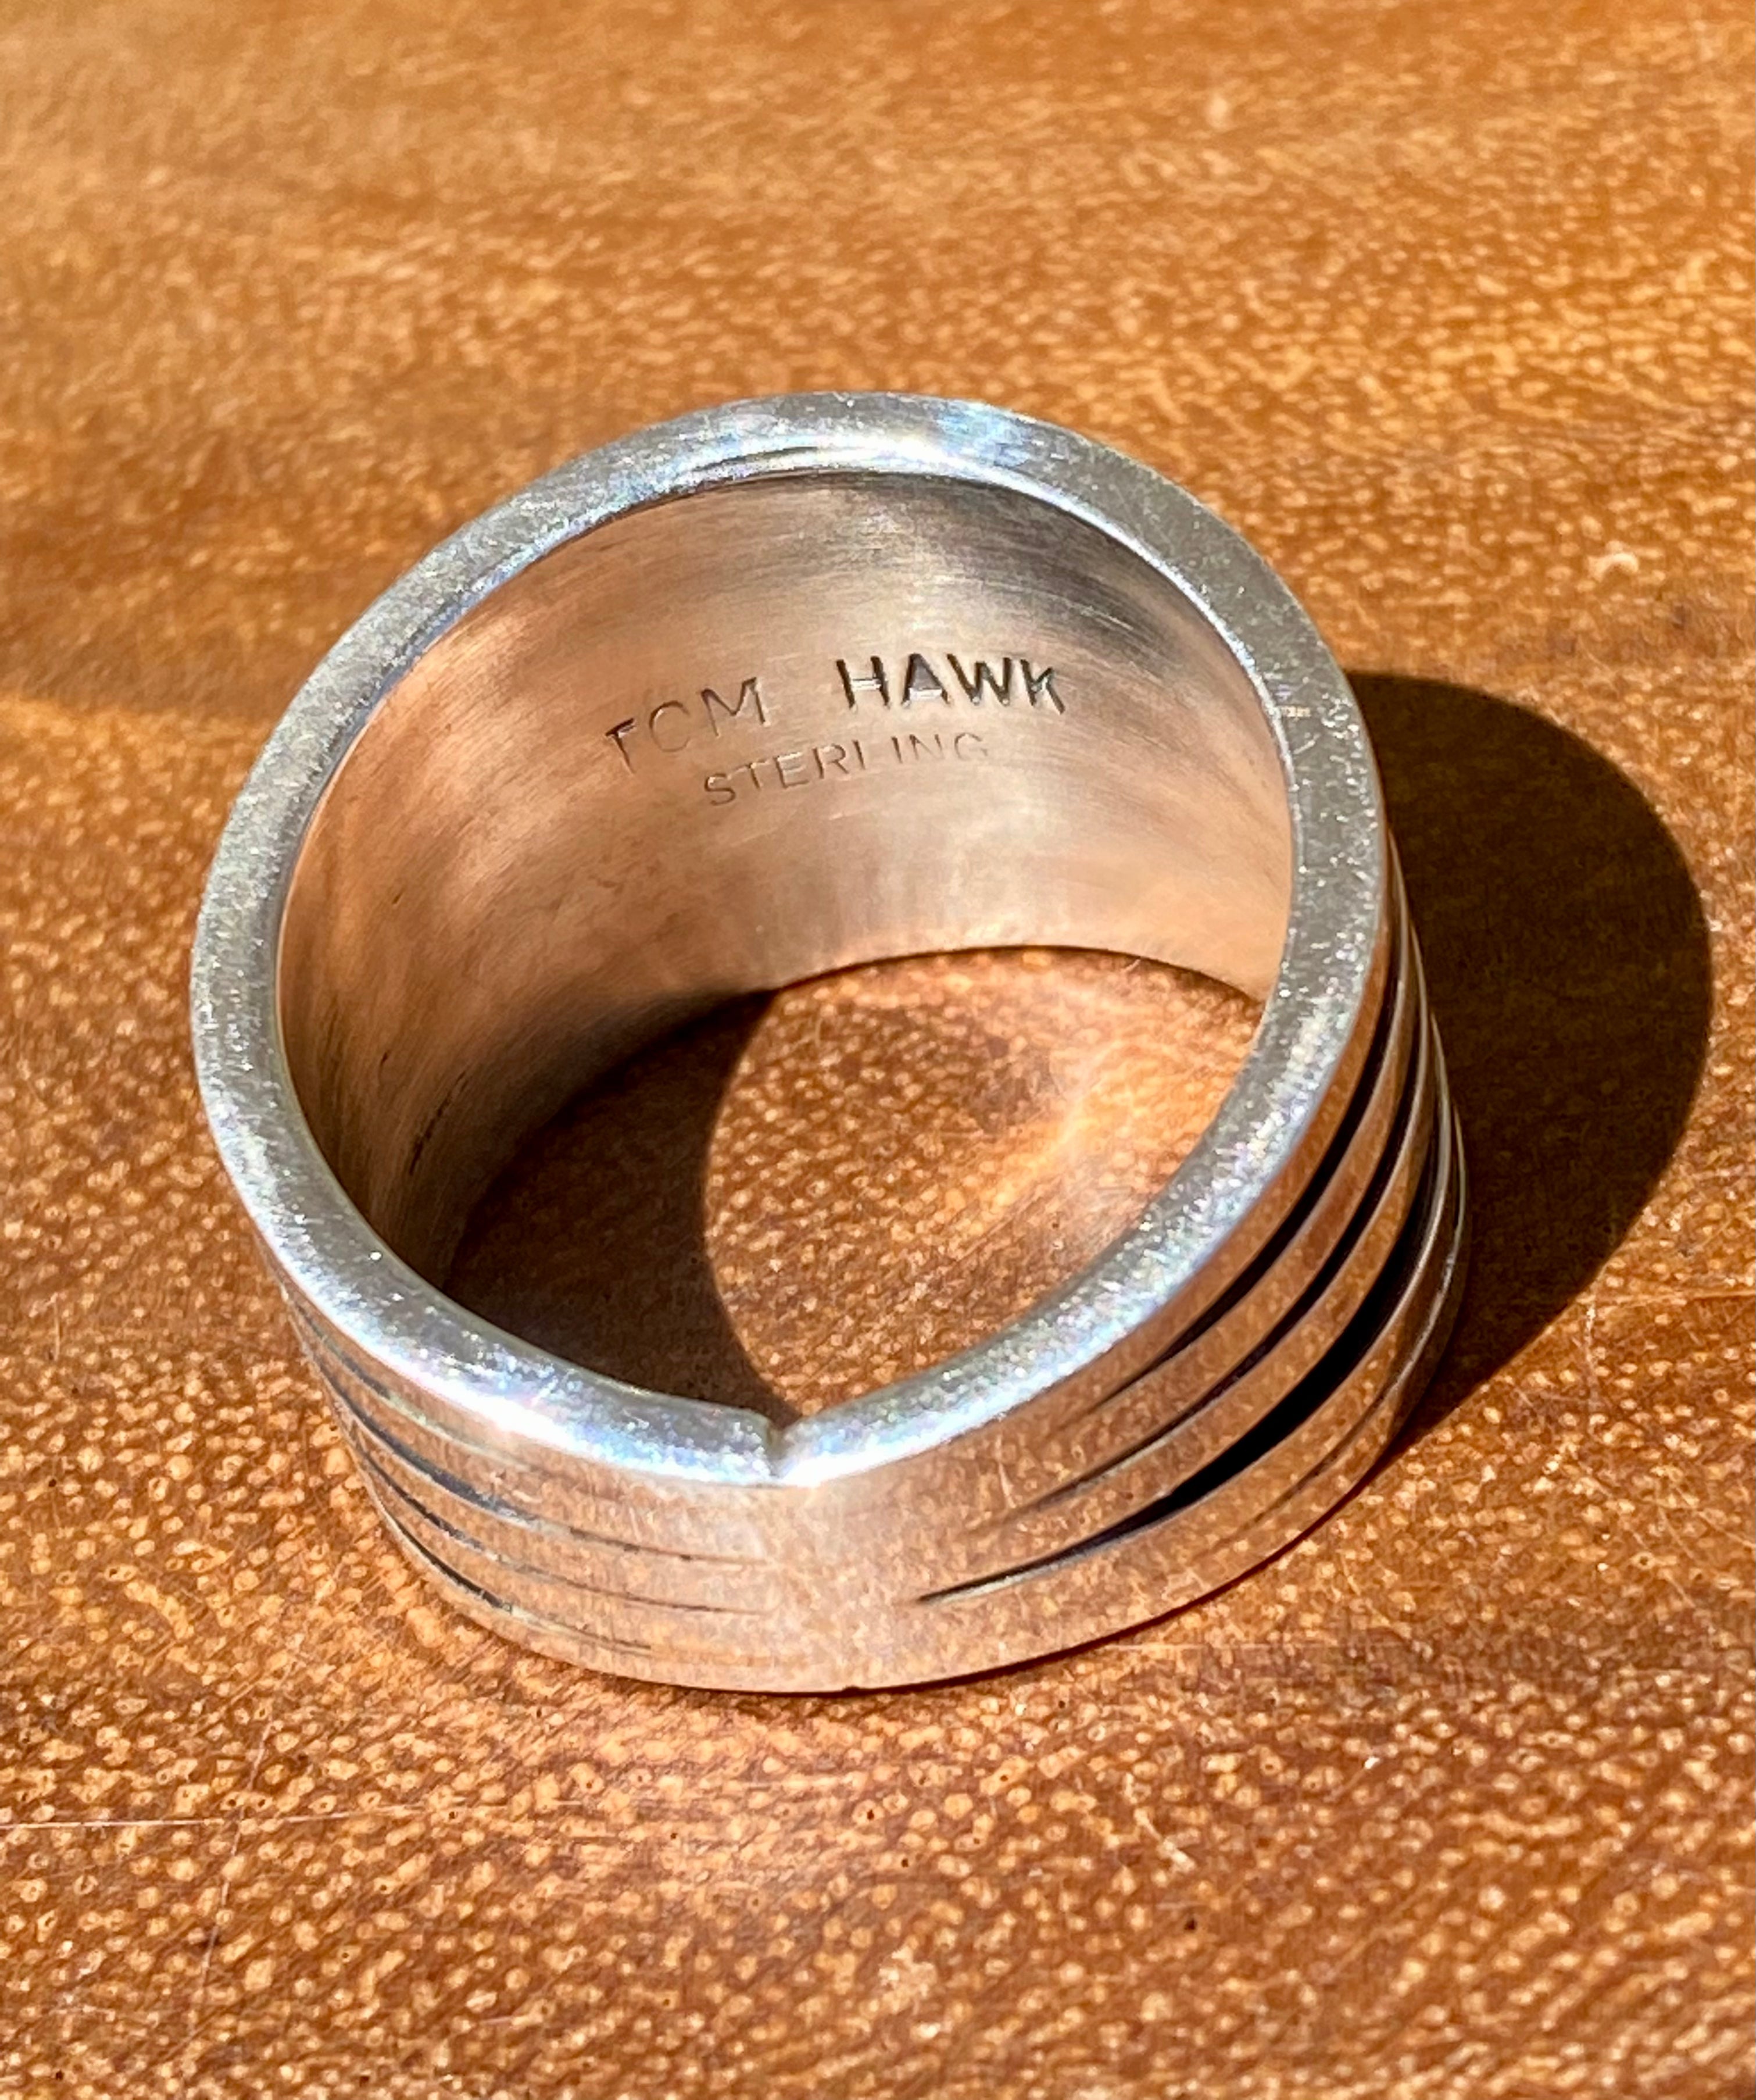 Tom Hawk Sterling Silver Ring Size 12.5